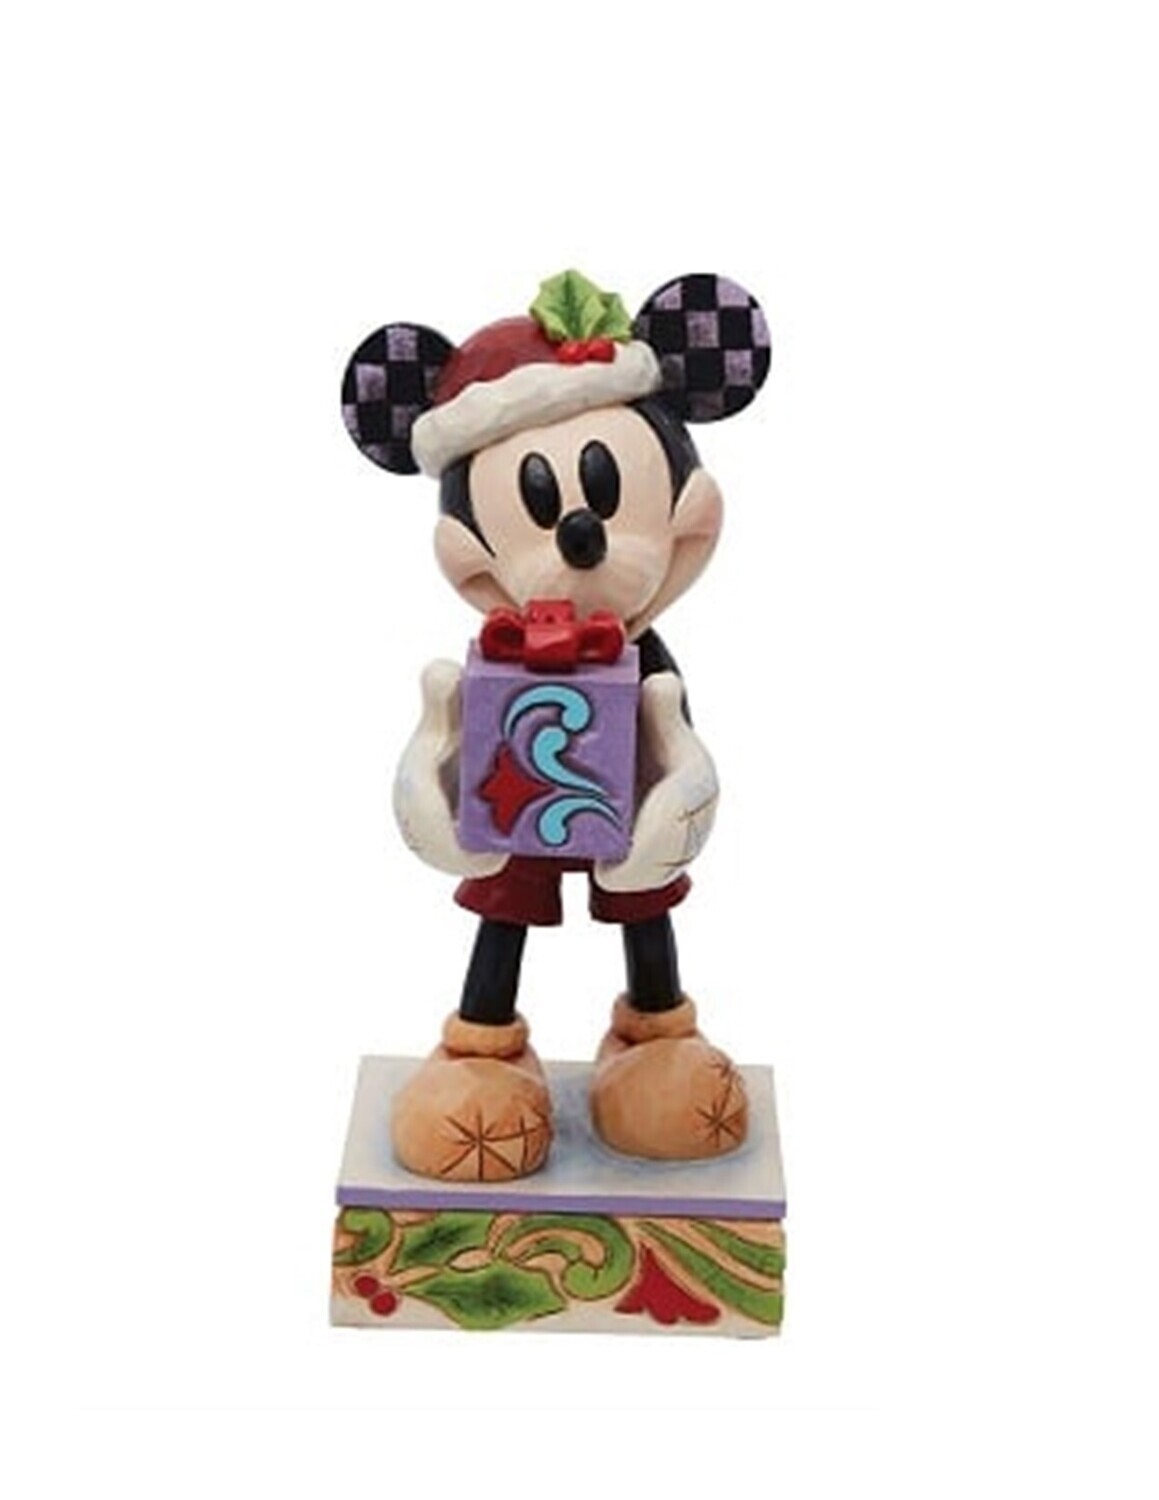 Jim Shore Disney Traditions "Secret Santa" Mickey with Gifts (6013060)